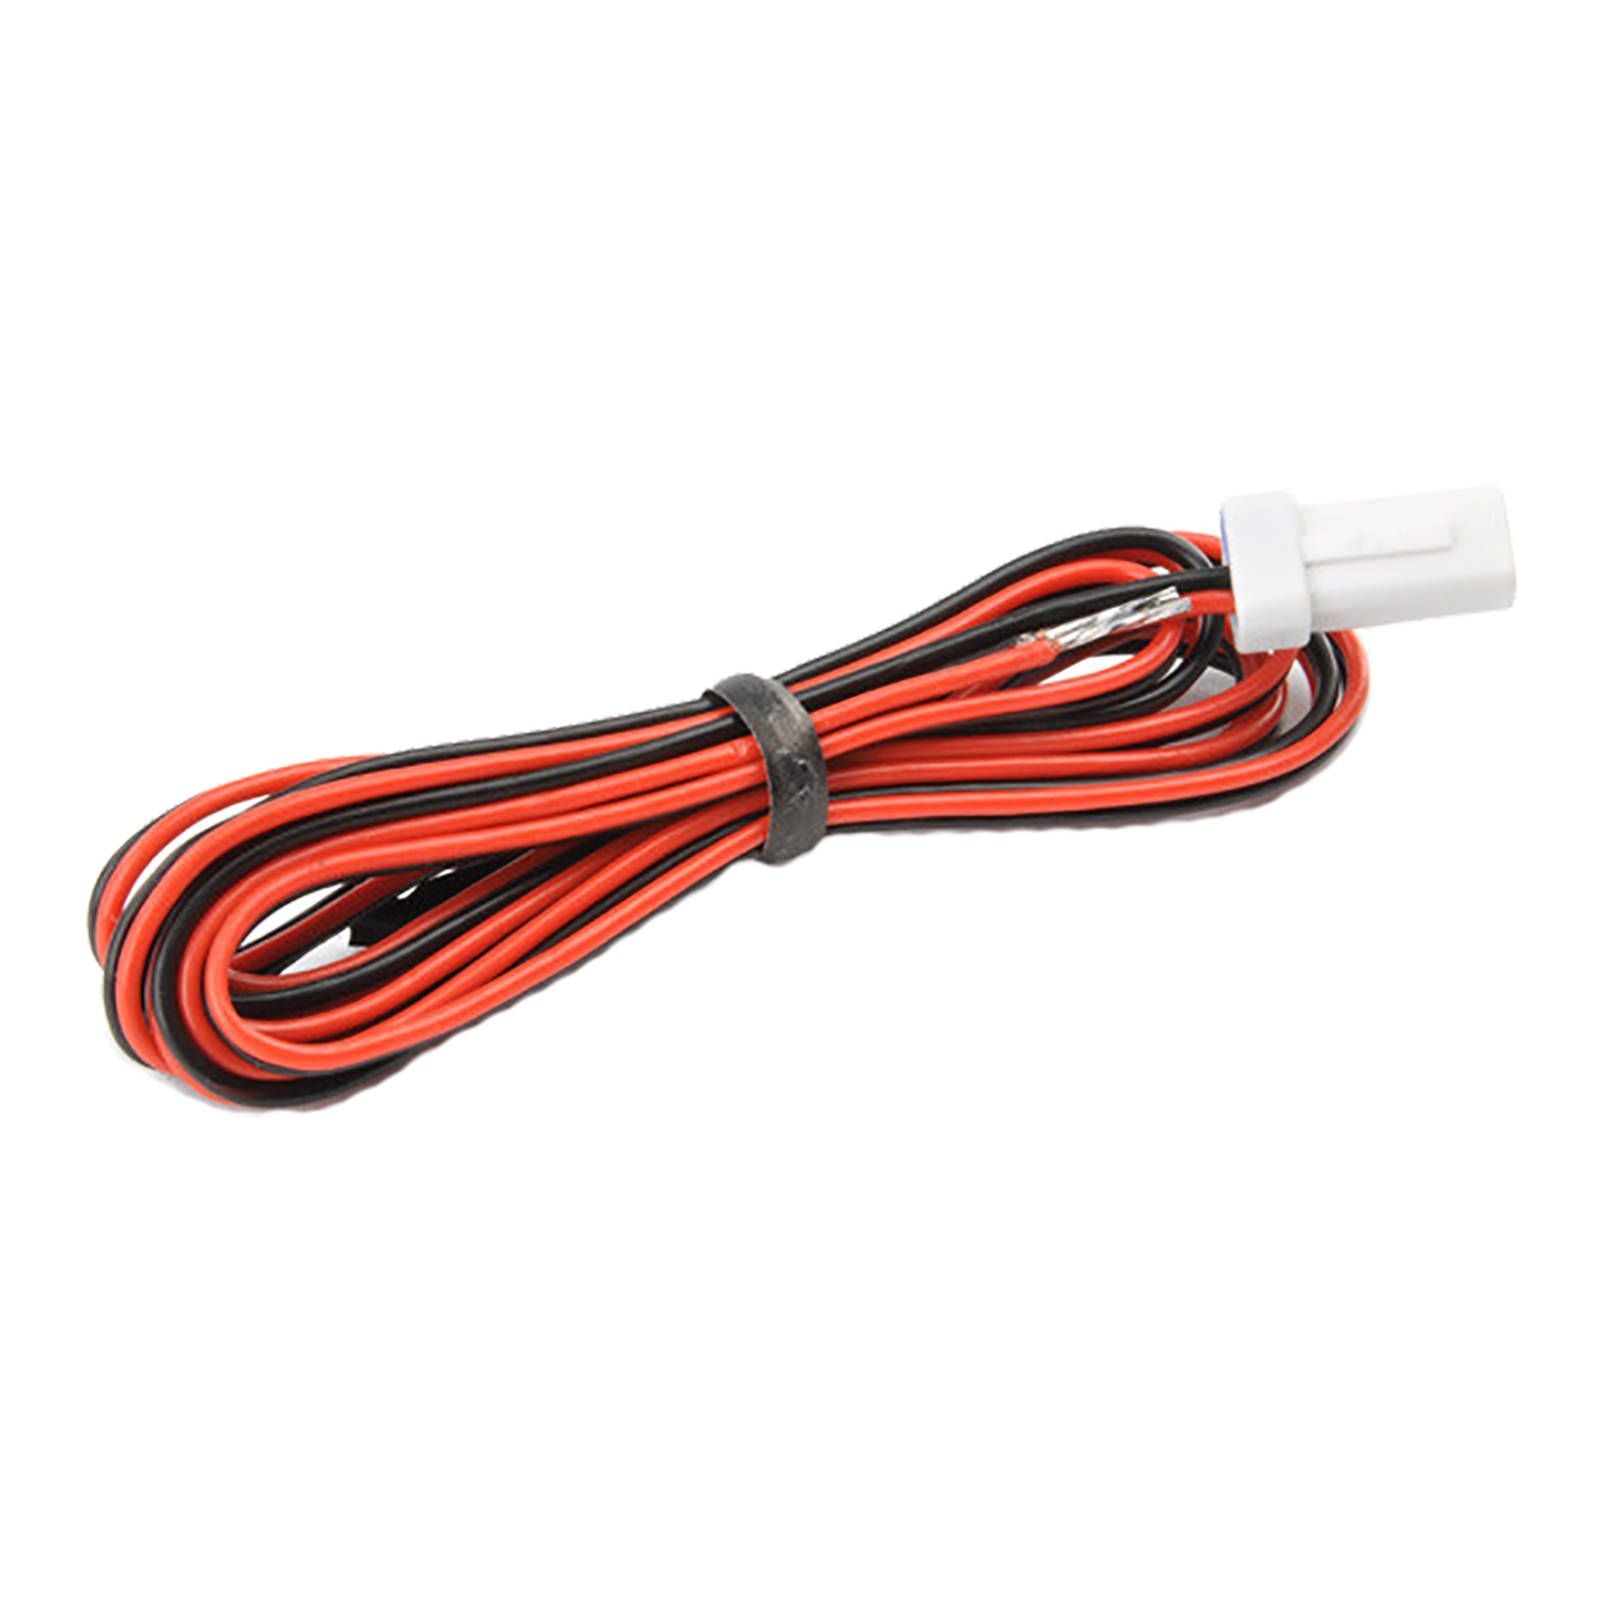 New TRAIL TECH Cvoyager/Vapor Power Wire - 48in #TT90001011